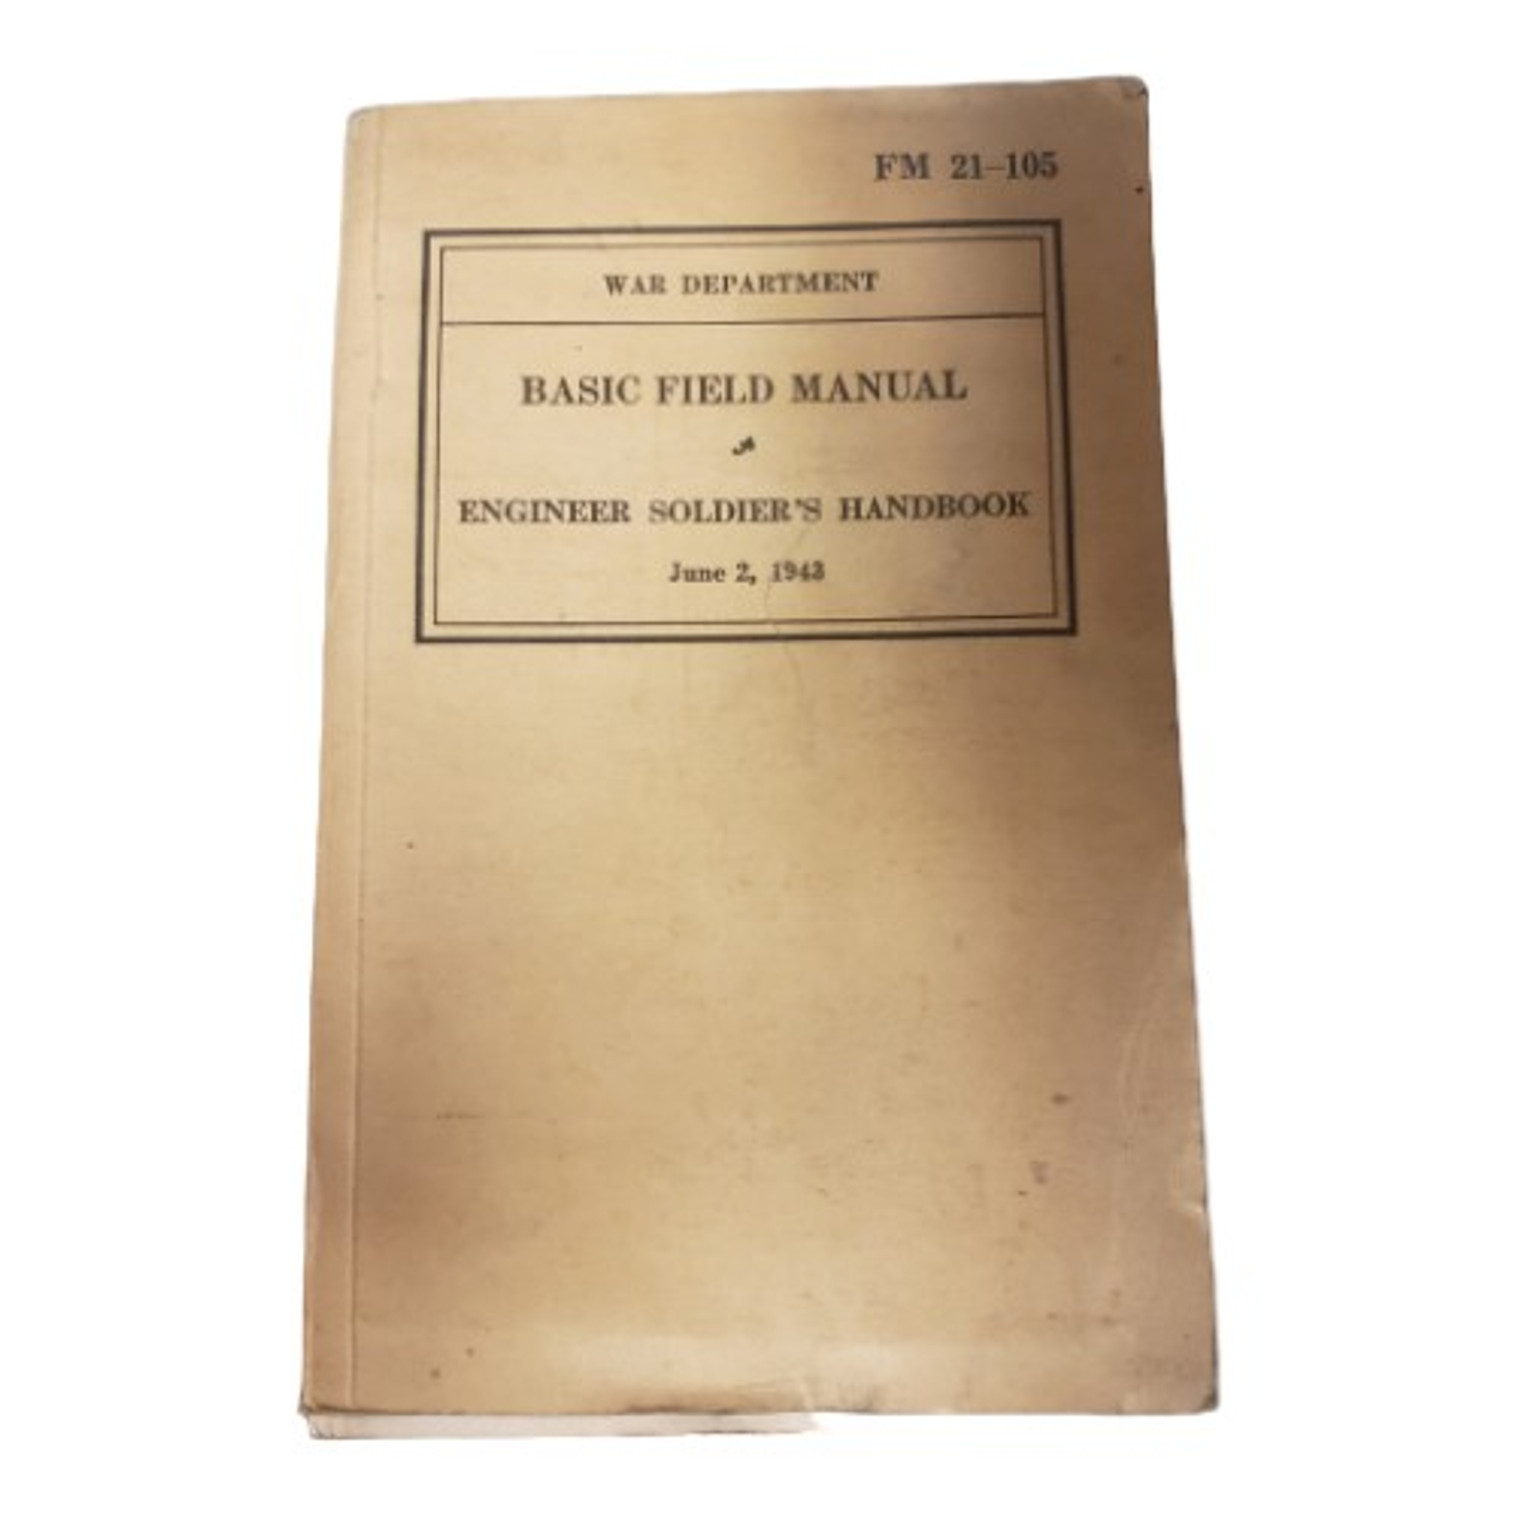 WW2 Basic Field Manual / Engineer Soldier's Handbook Dated 1943